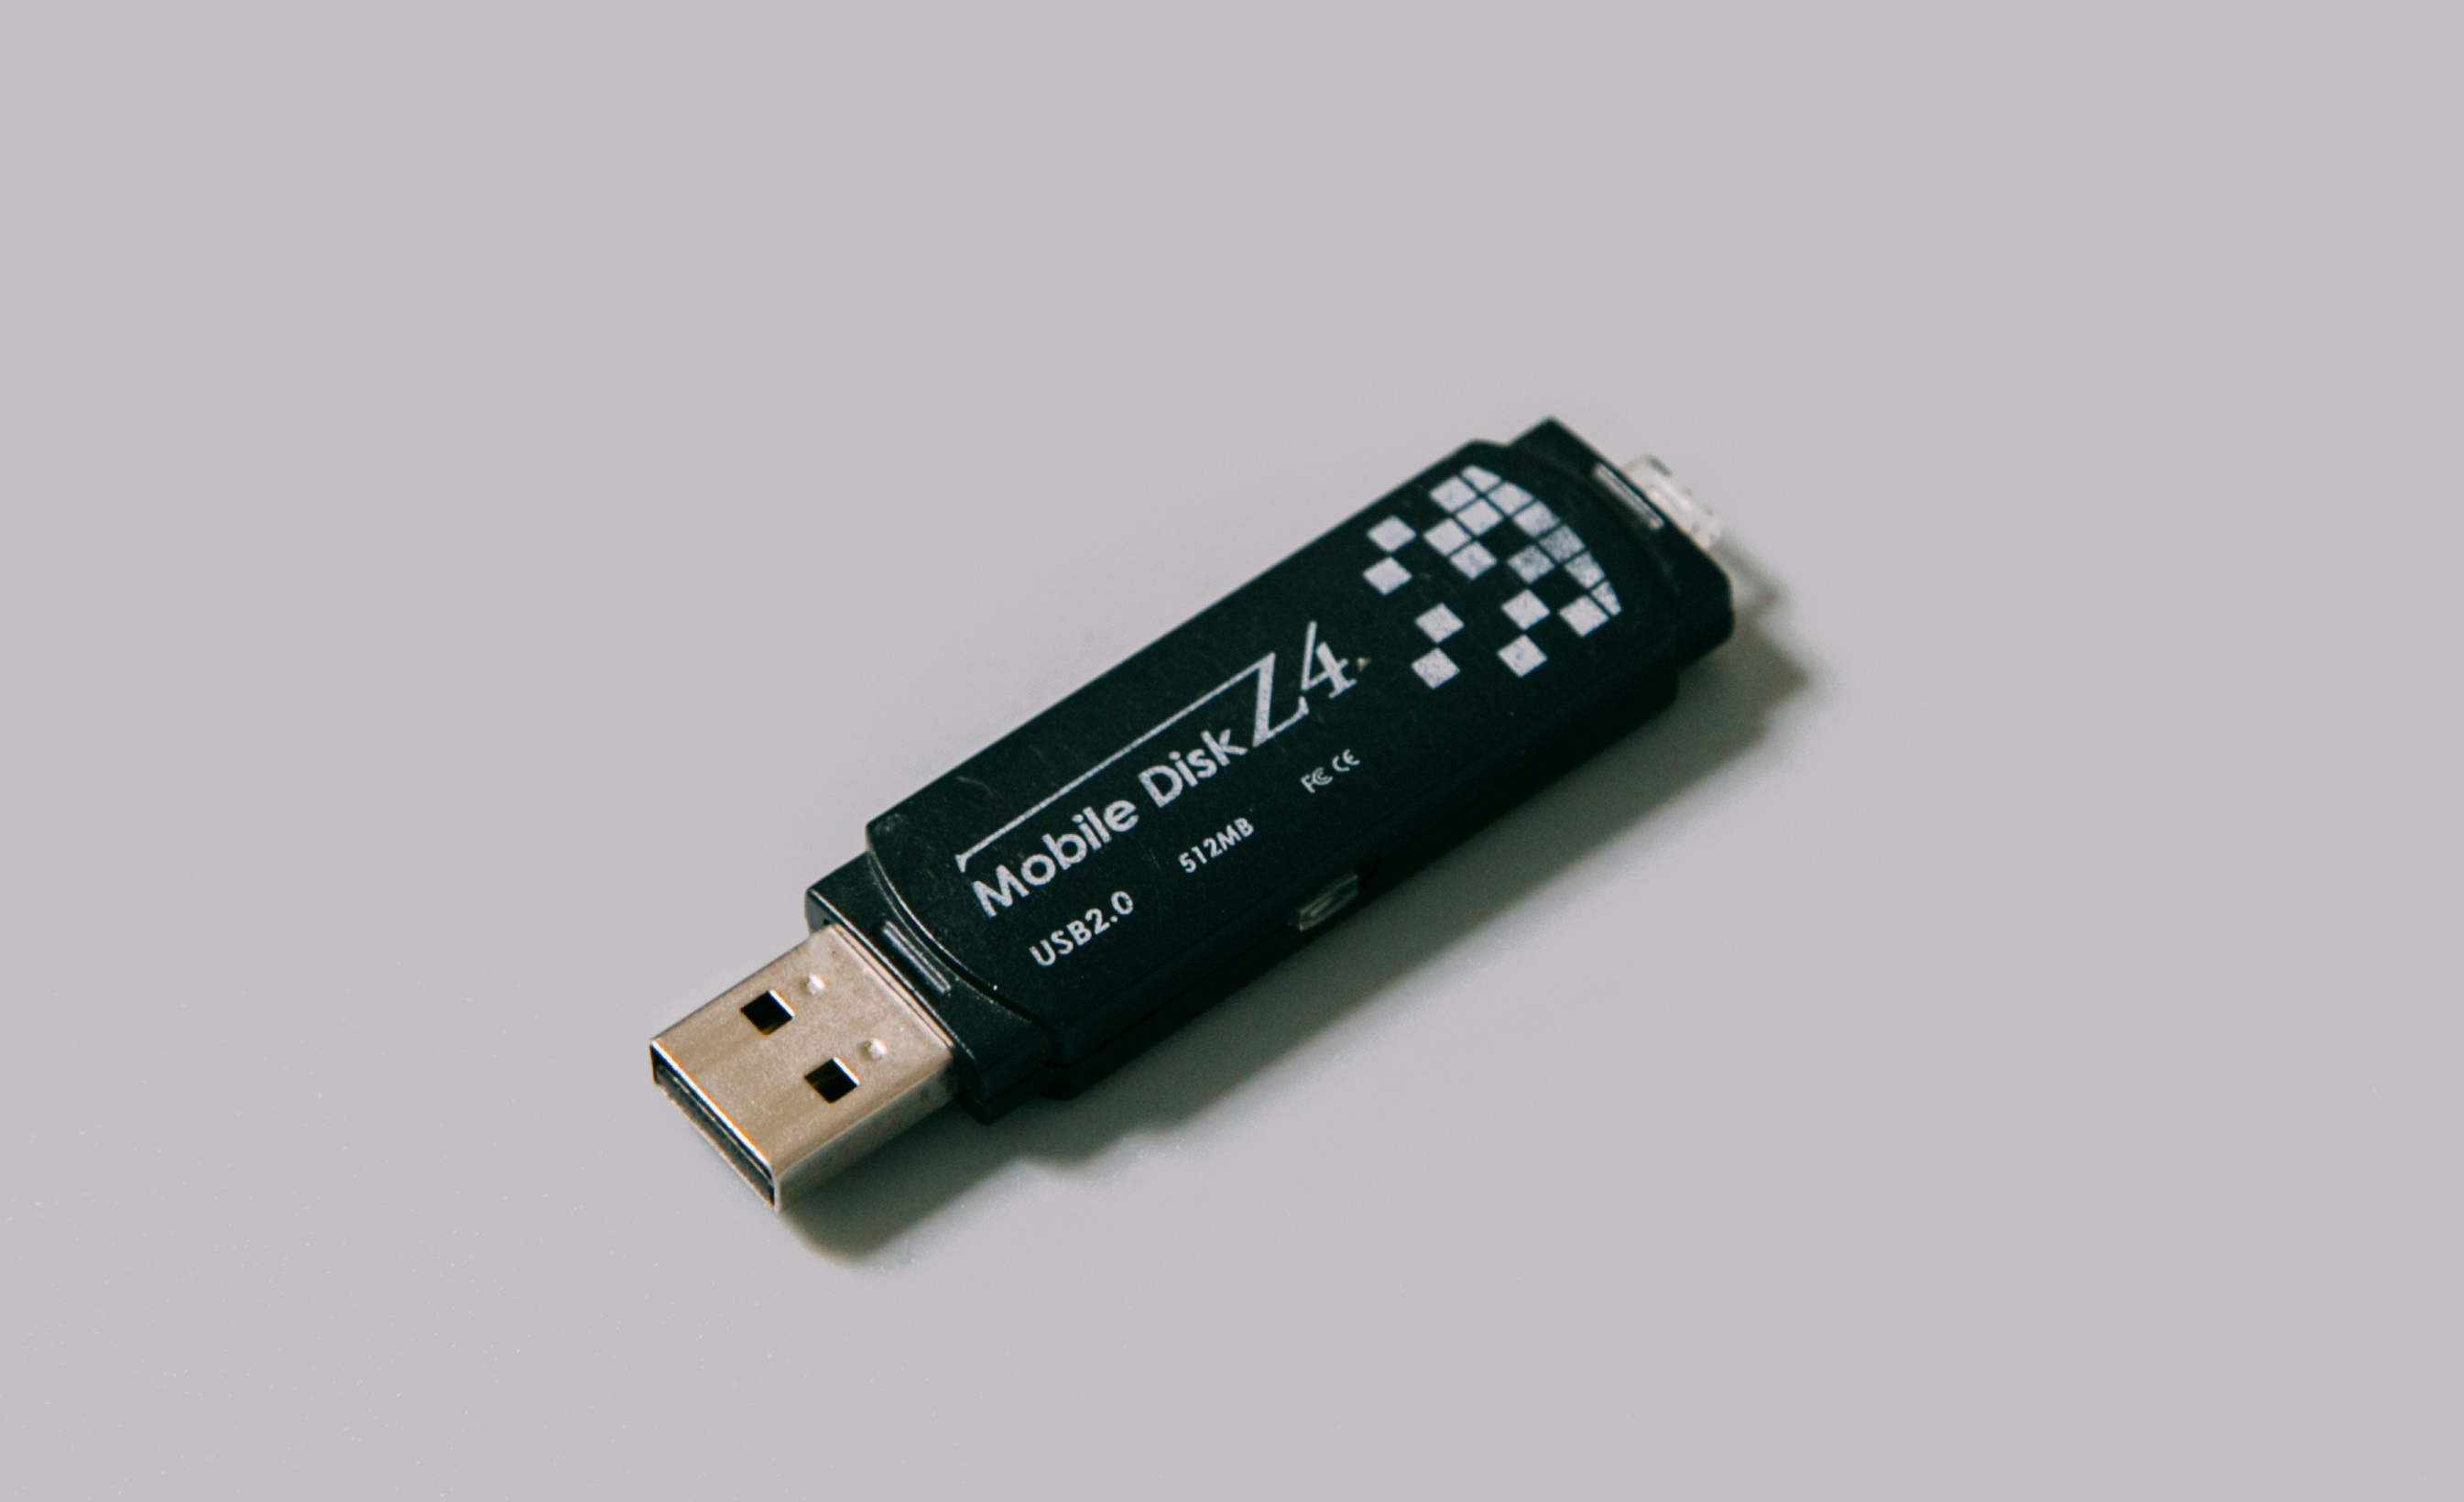 a usb flash drive on the desk